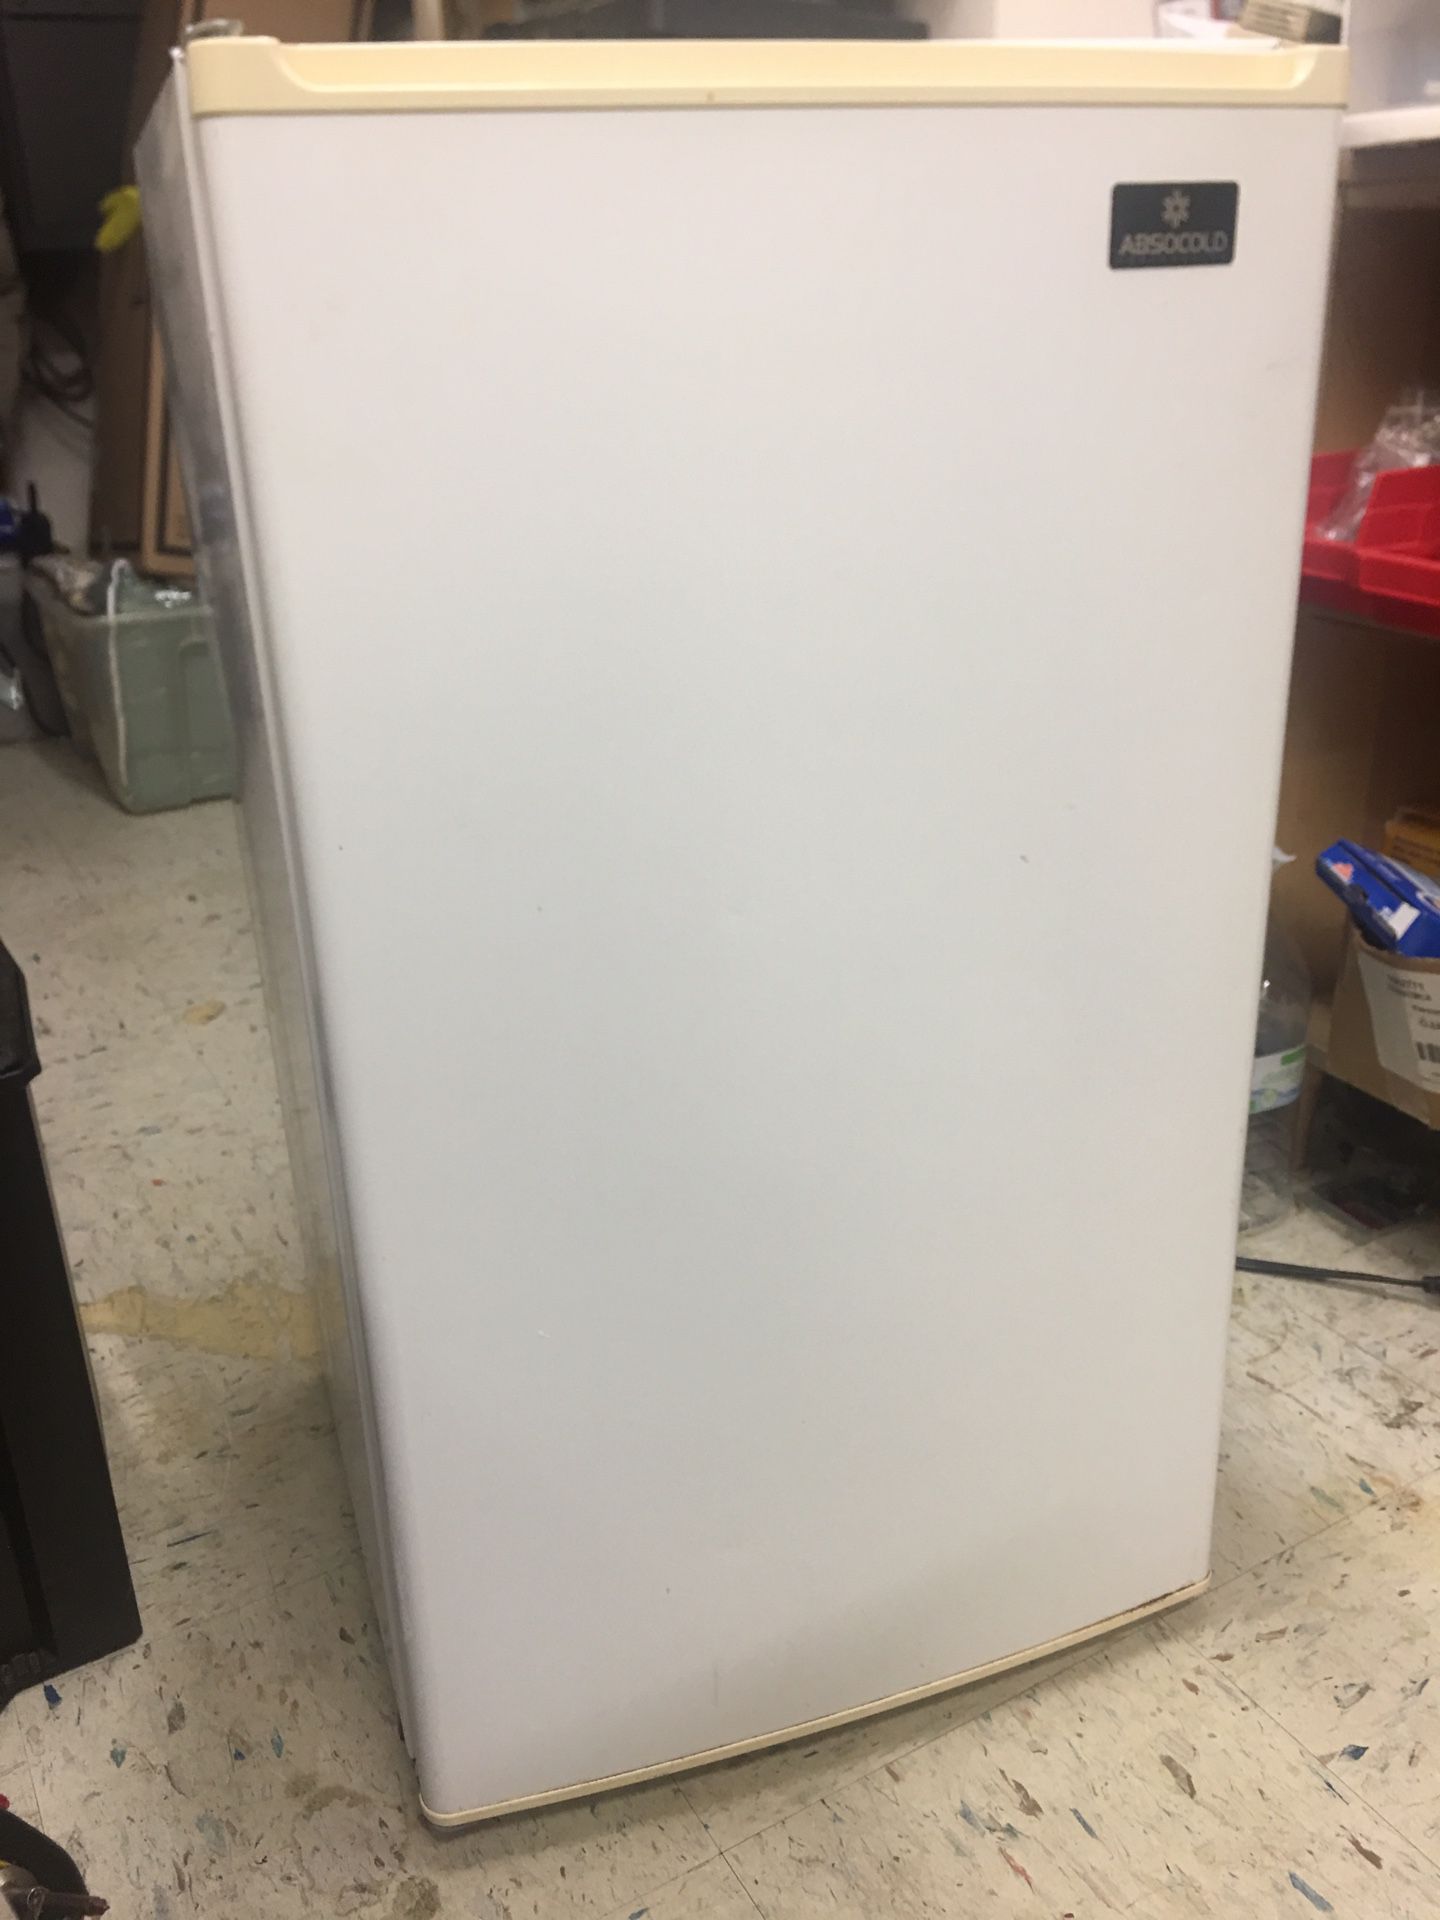 Mini fridge and freezer